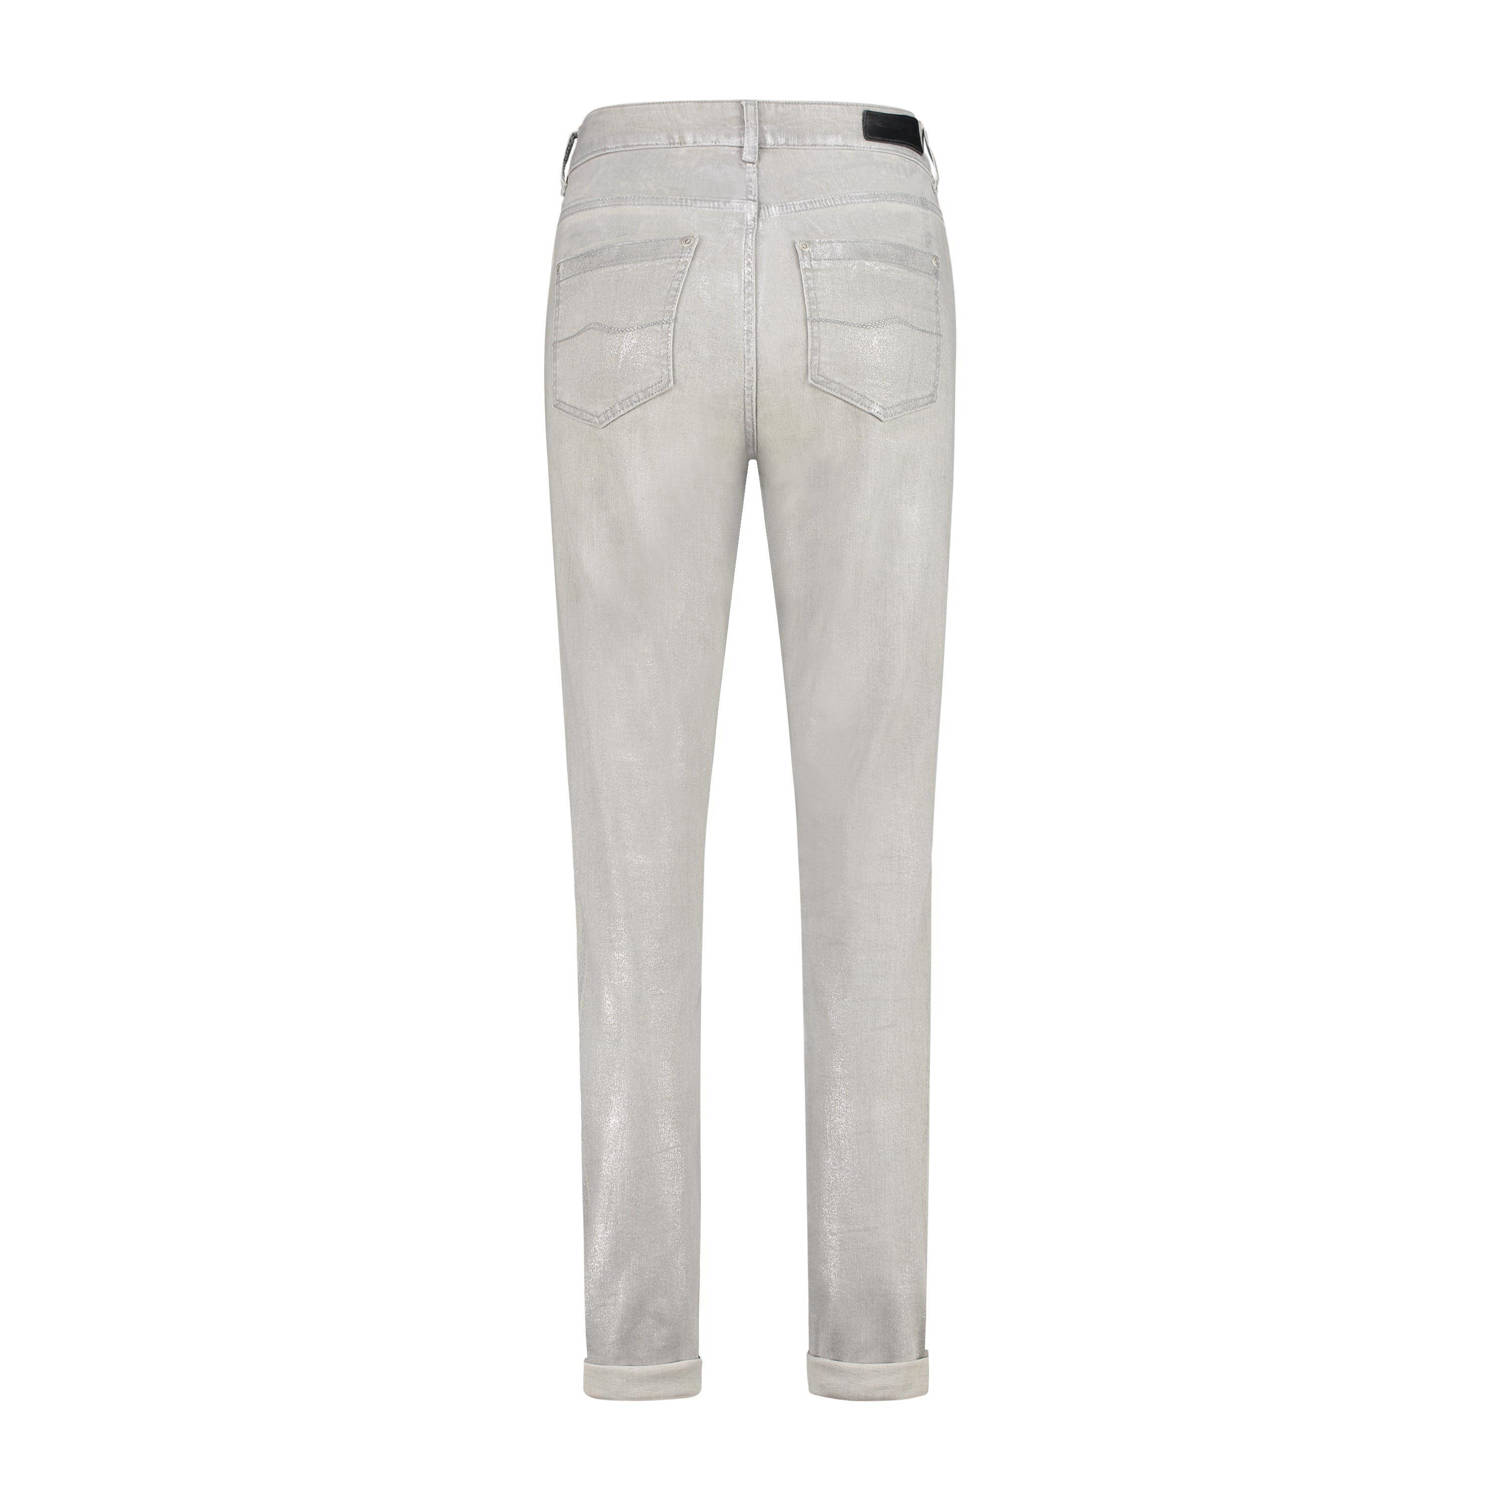 Expresso metallic coated slim fit jeans grey denim